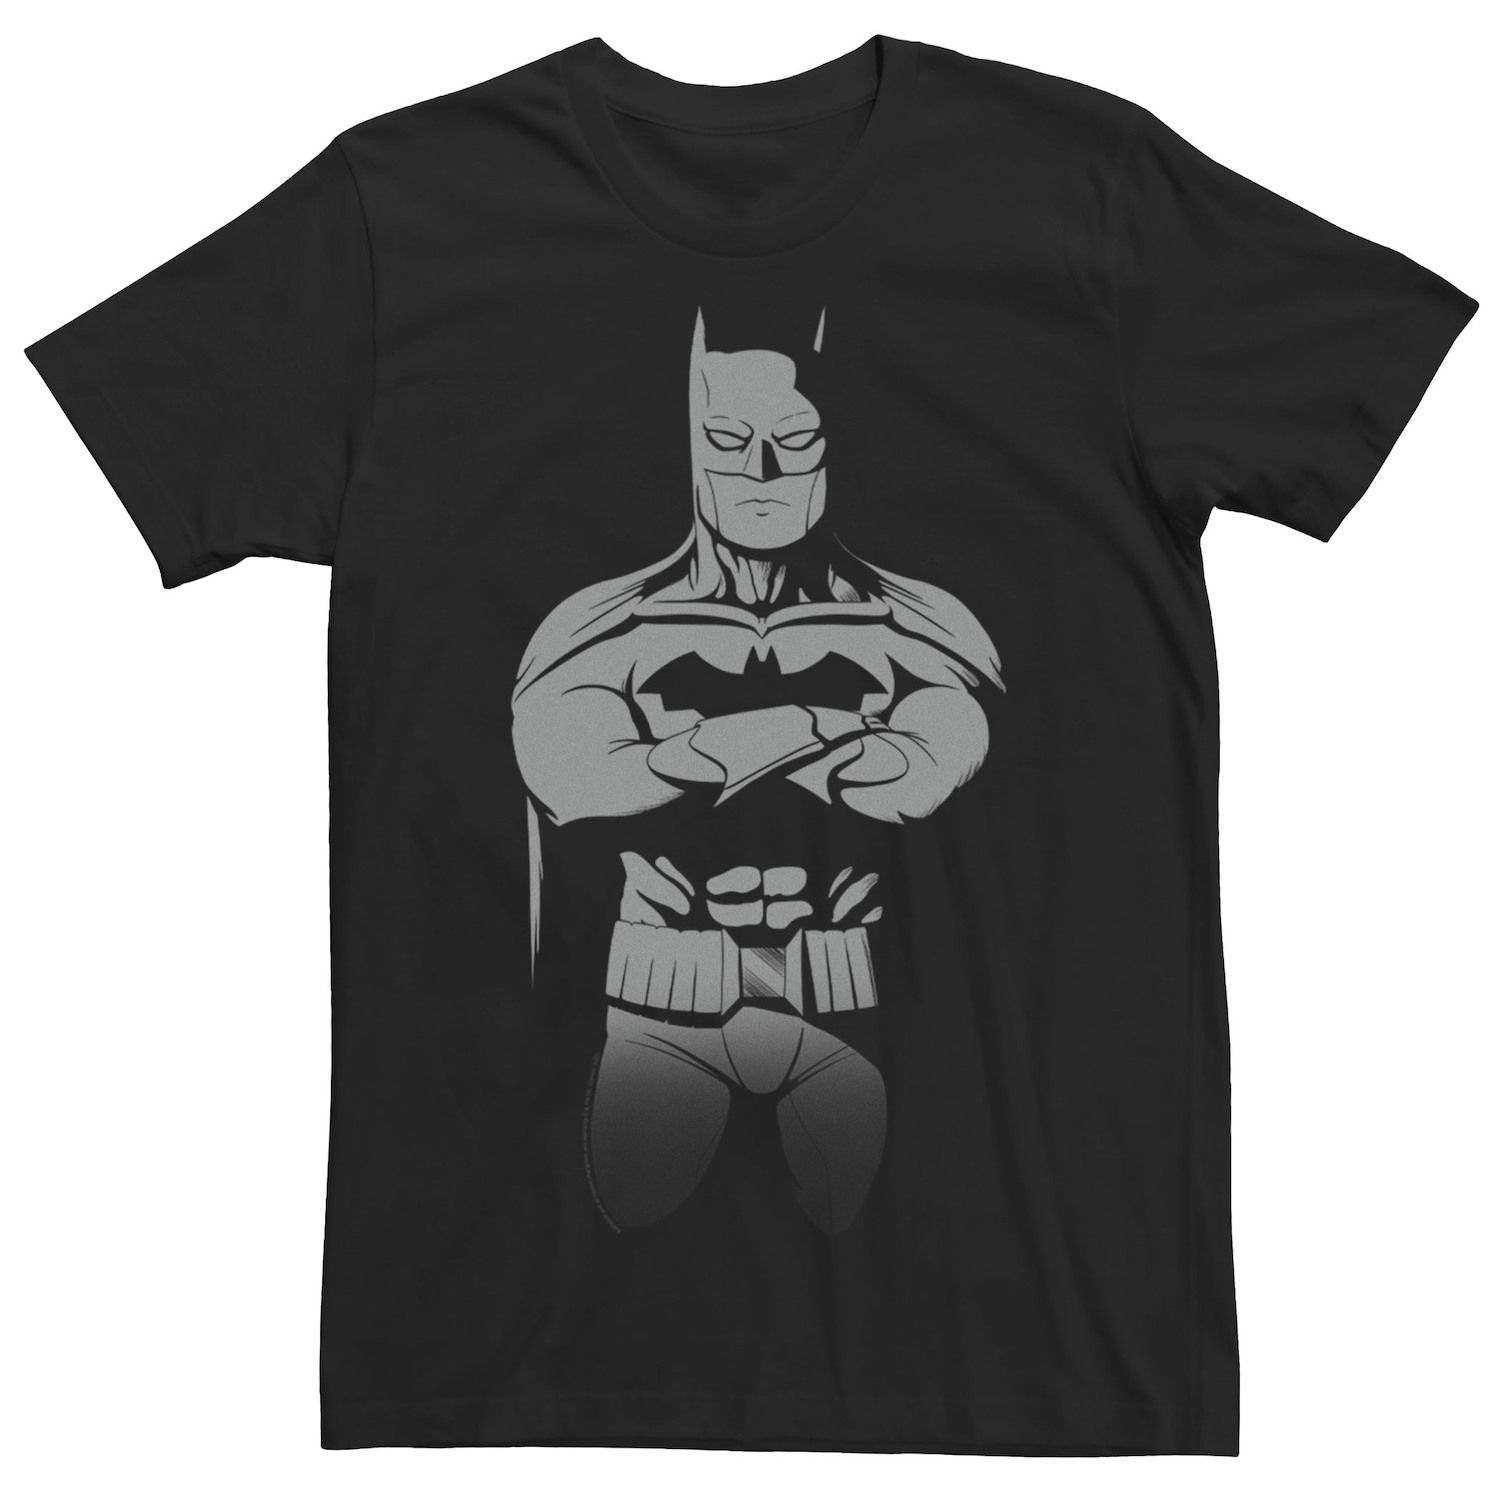 Мужская футболка DC FanDome с рисунком Бэтмена и скрещенными руками Licensed Character